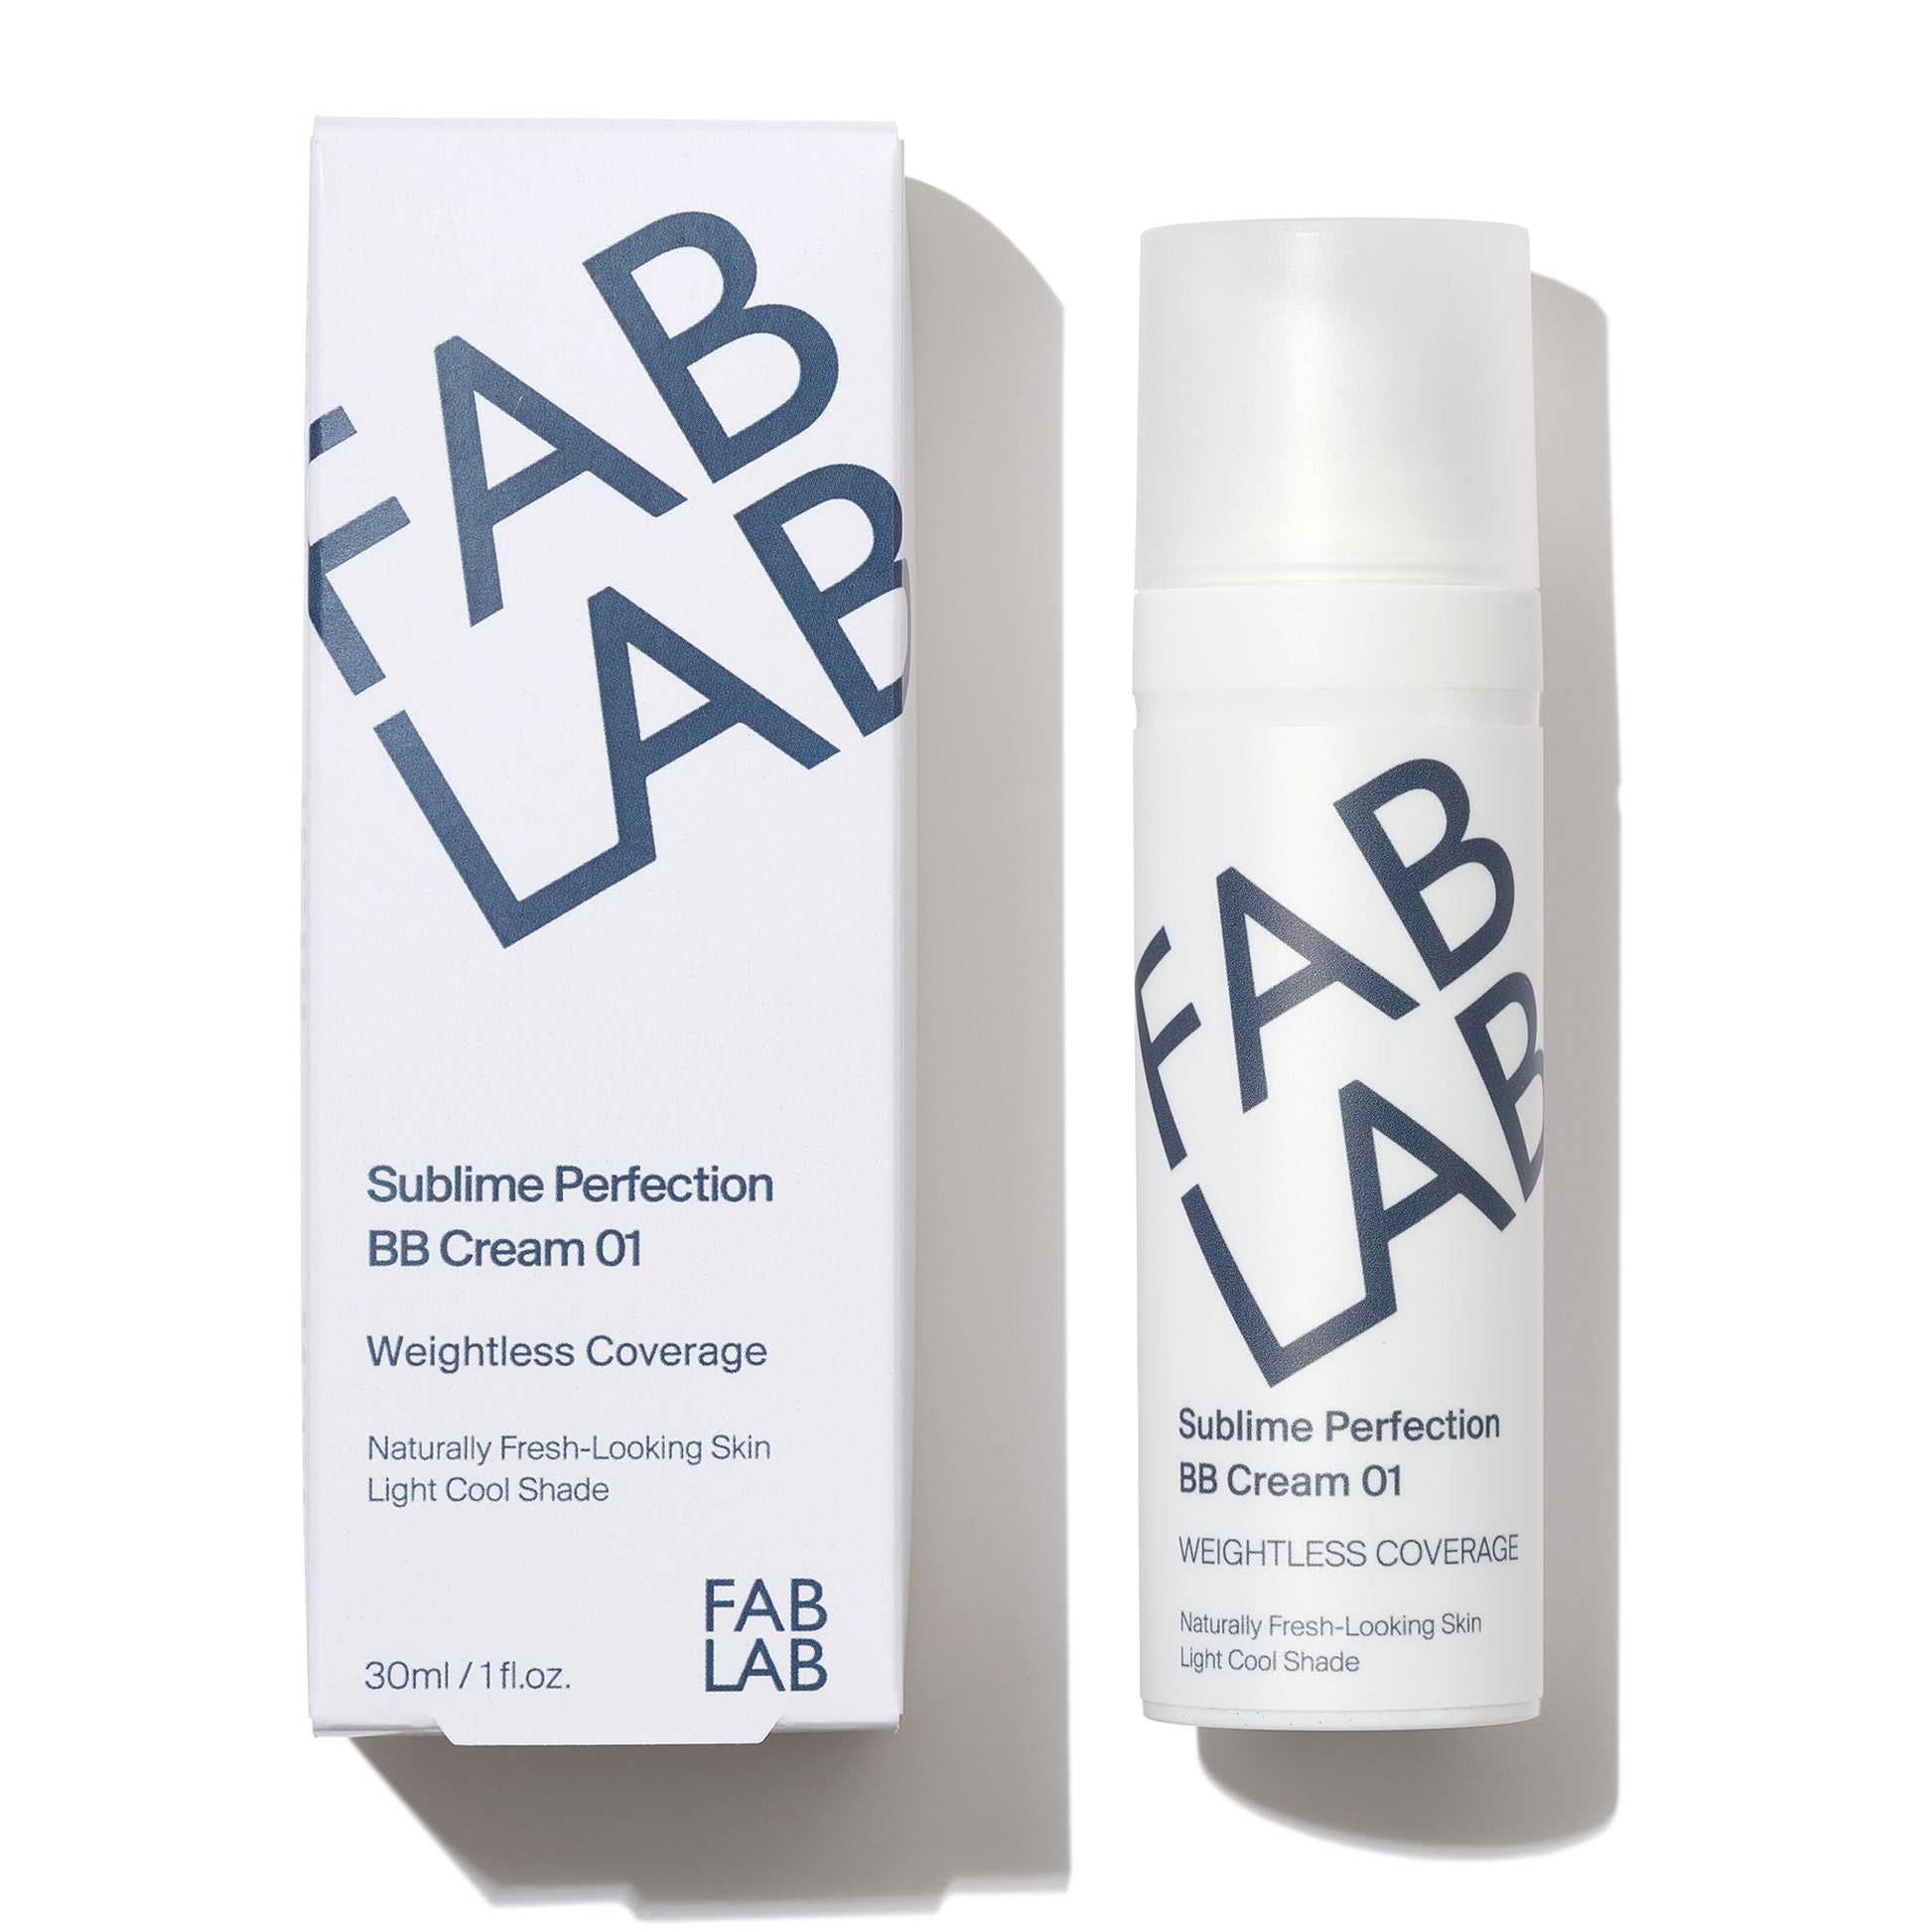 Sublime Perfection BB Cream 01 - FABLAB Skincare - fablabskincare